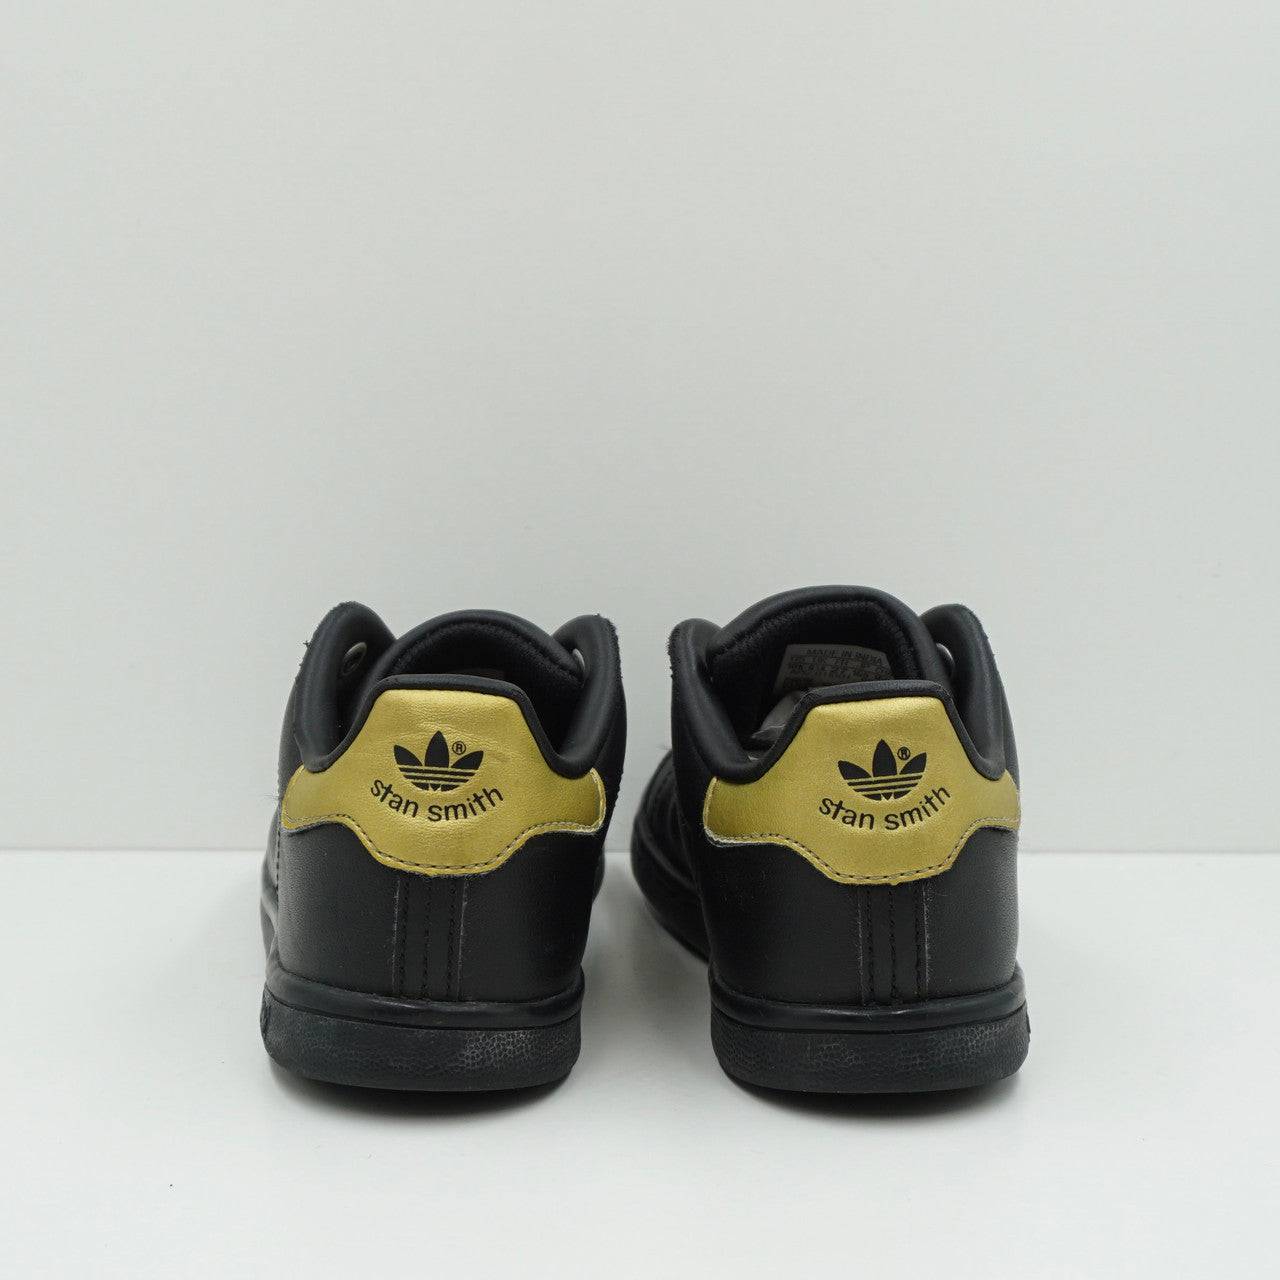 Adidas Stan Smith Black Gold Toddler